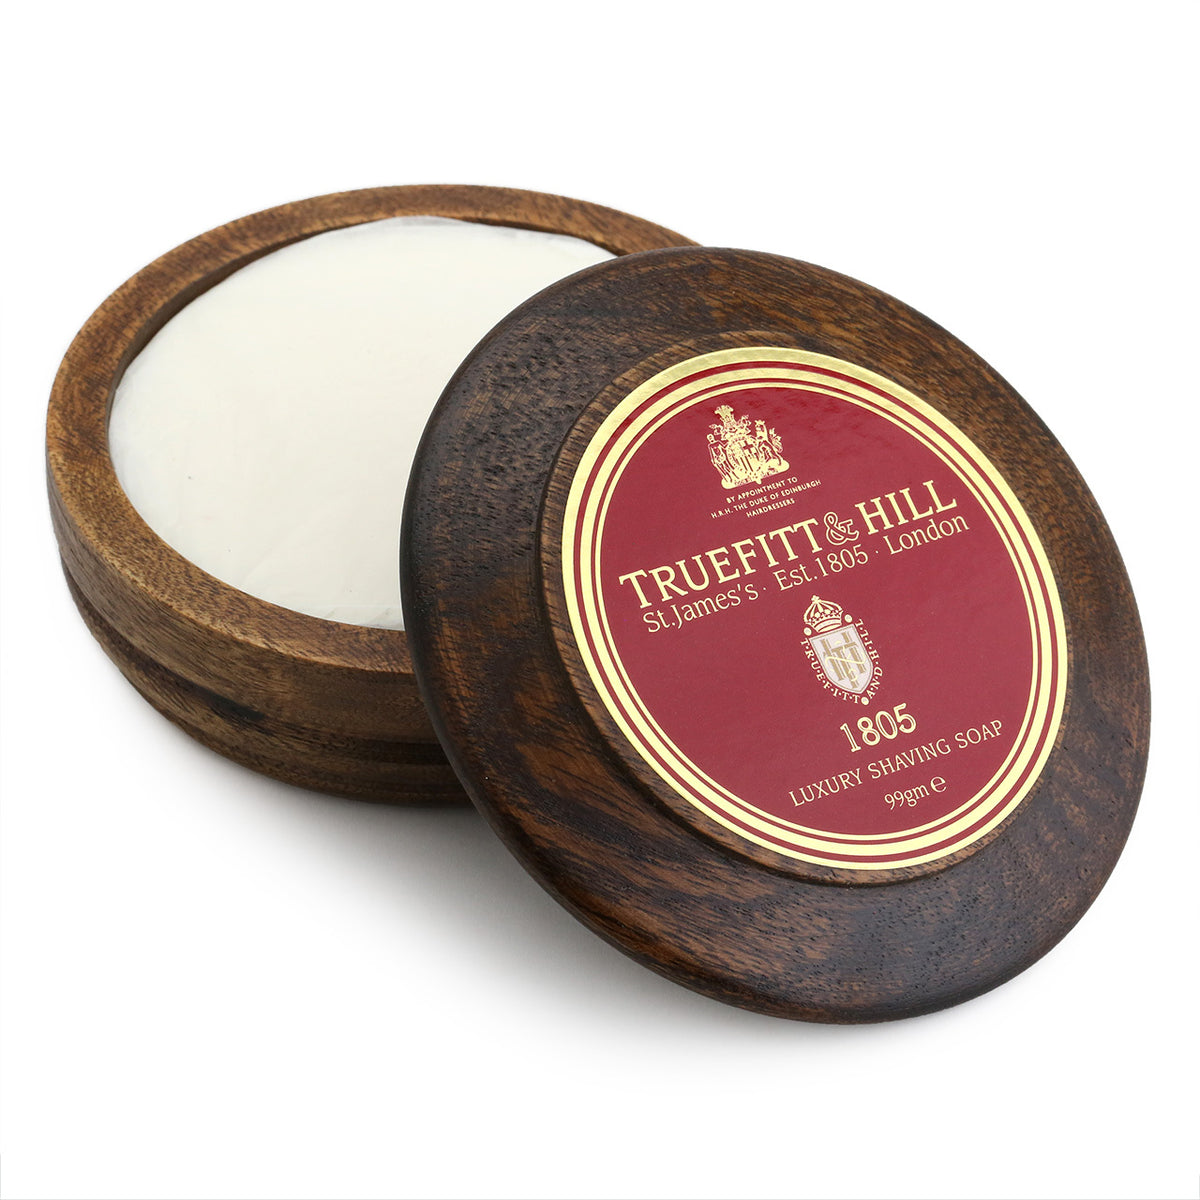 Truefitt &amp; Hill Luxury Shave Soap in Wooden Bowl 99g - 1805